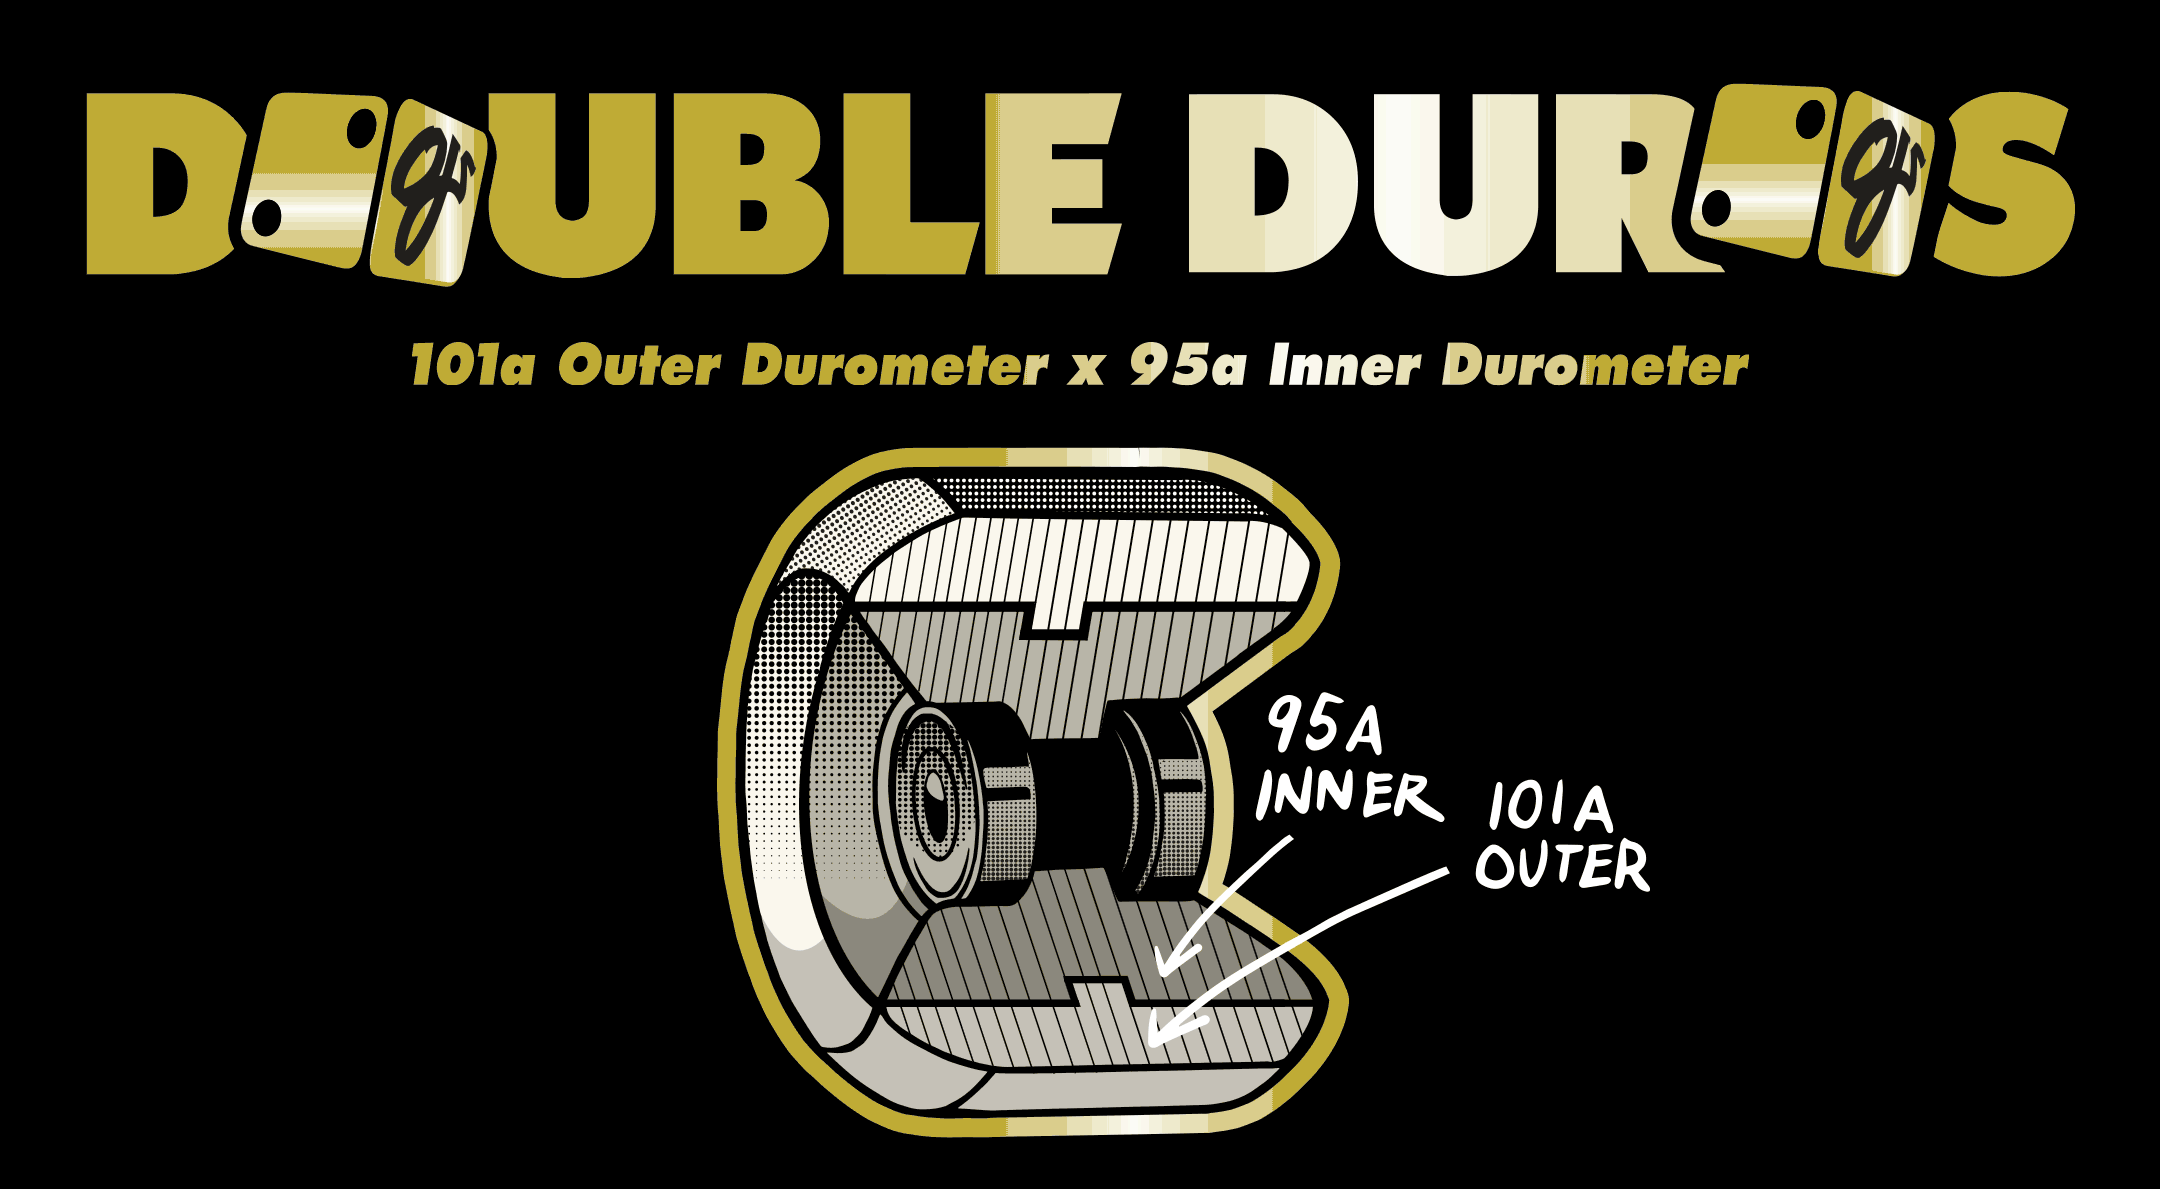 OJ Double Durometer